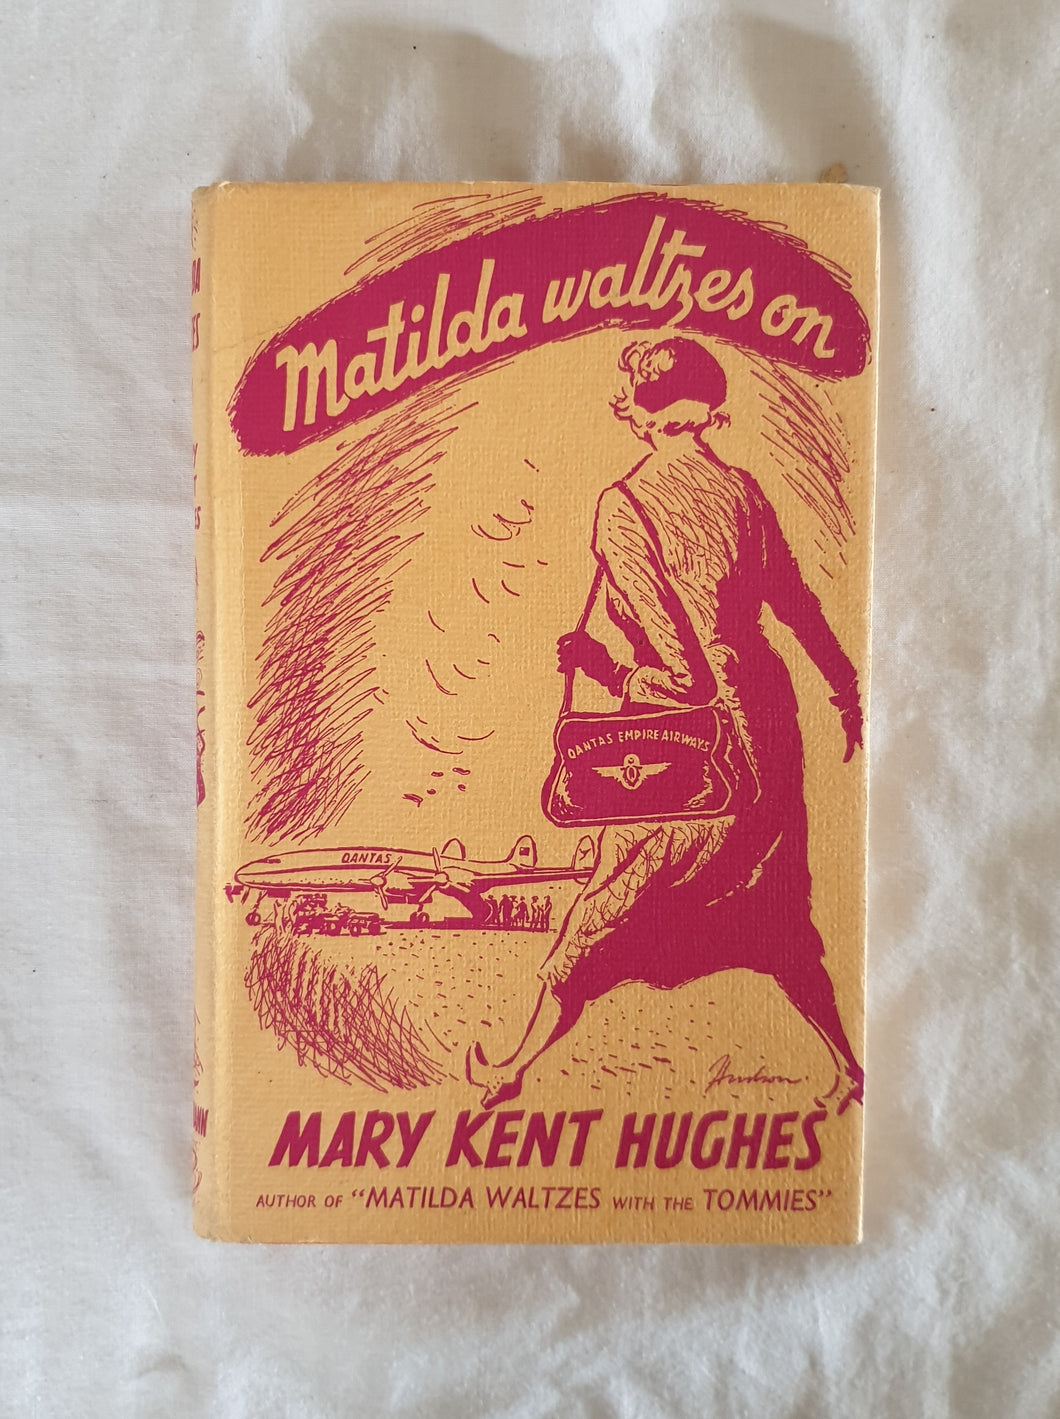 Matilda Waltzes On  by Mary Kent Hughes